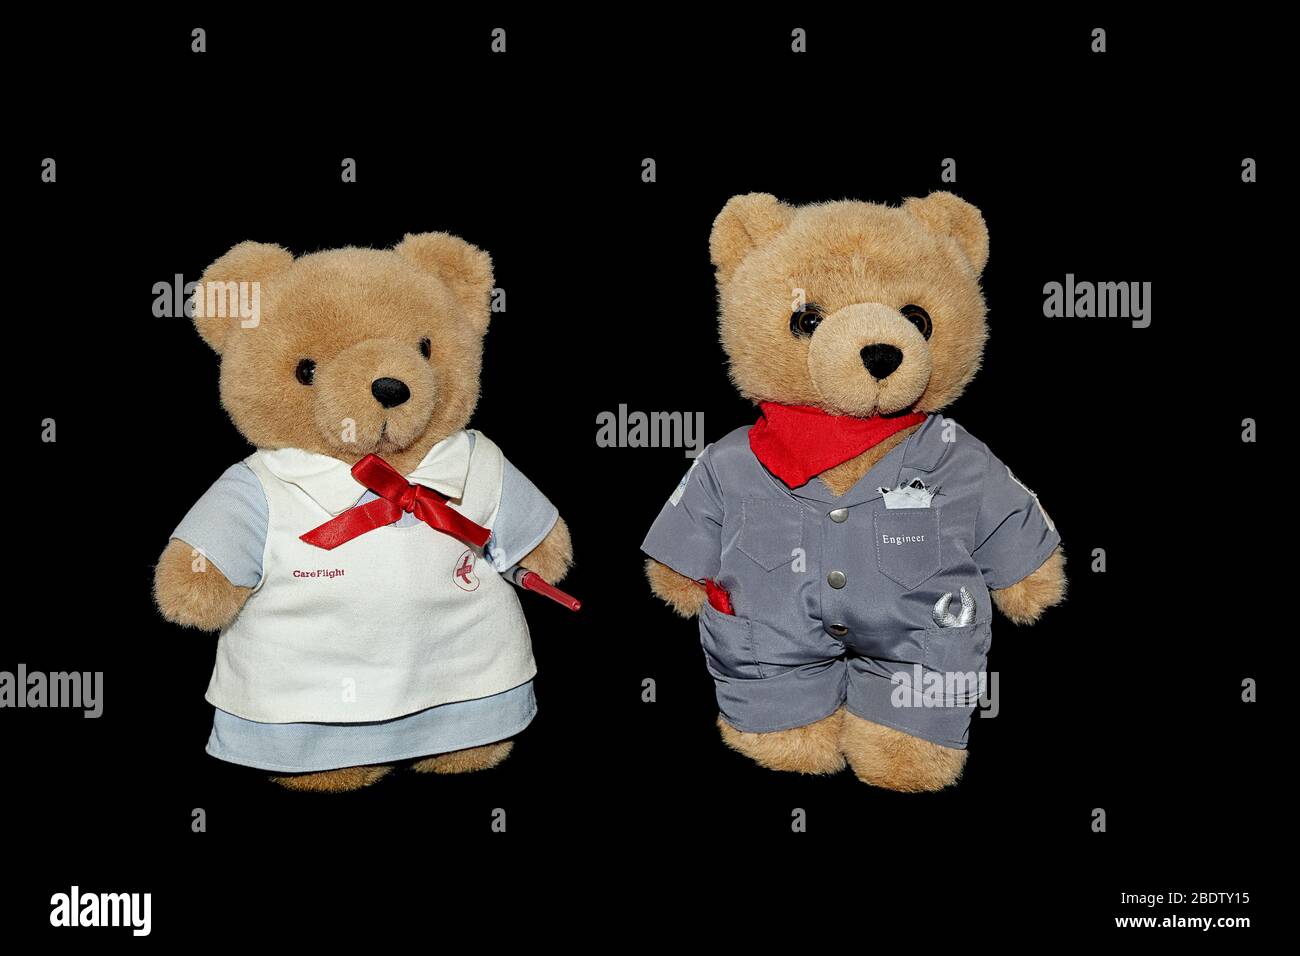 Teddy Bears practice Social Distancing Stock Photo